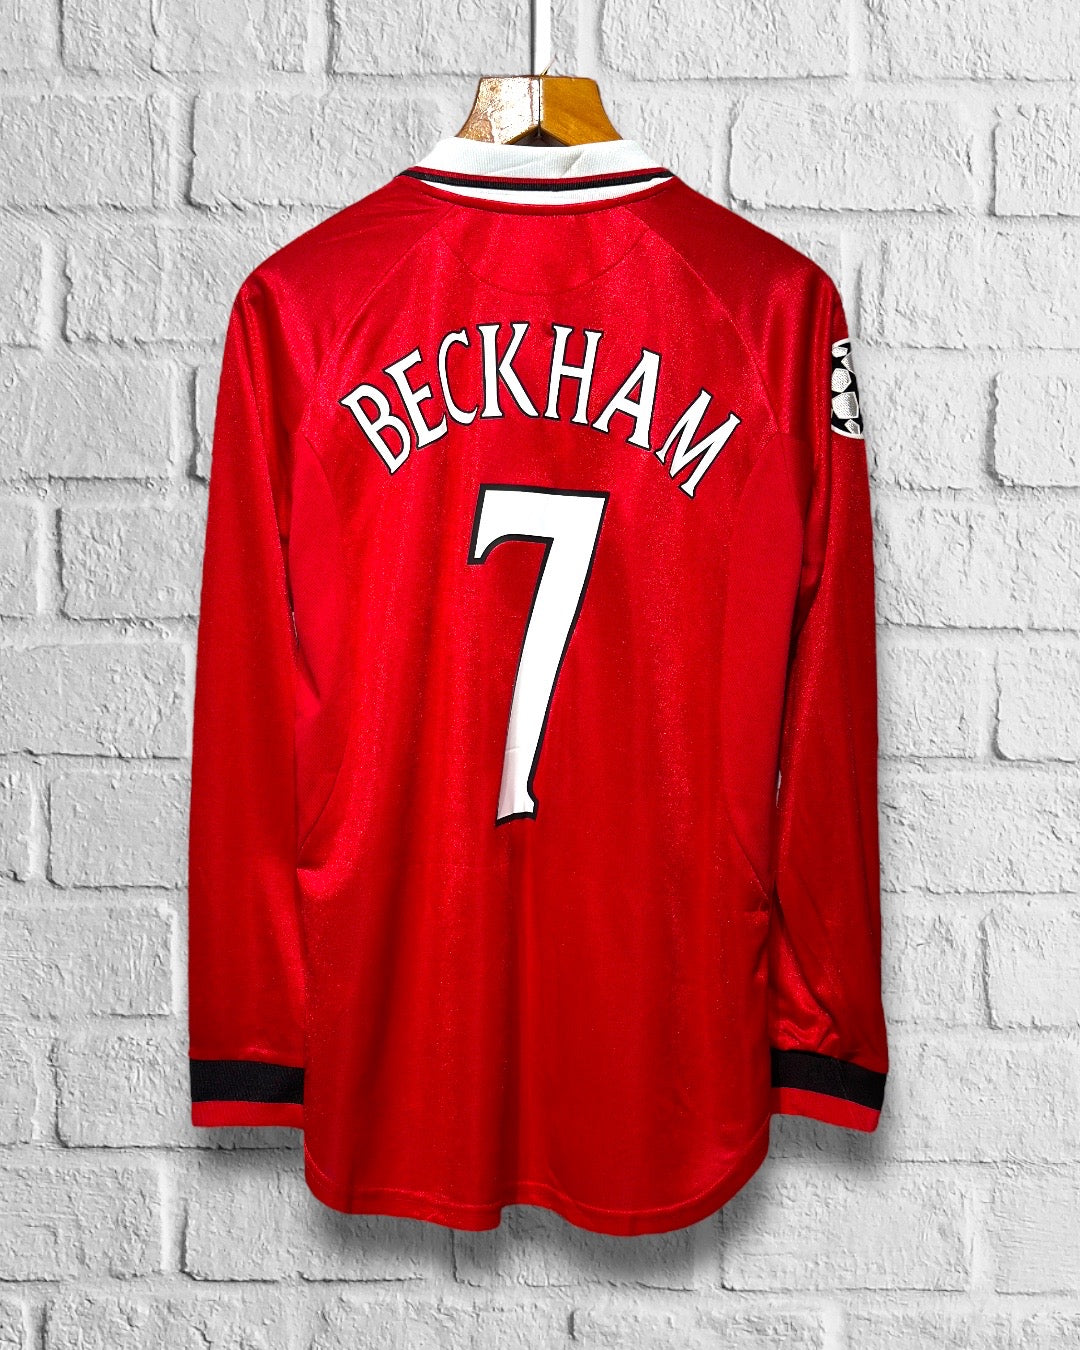 Jersey Retro Manchester United 1998 1999 Local Beckham Champions League dorsal